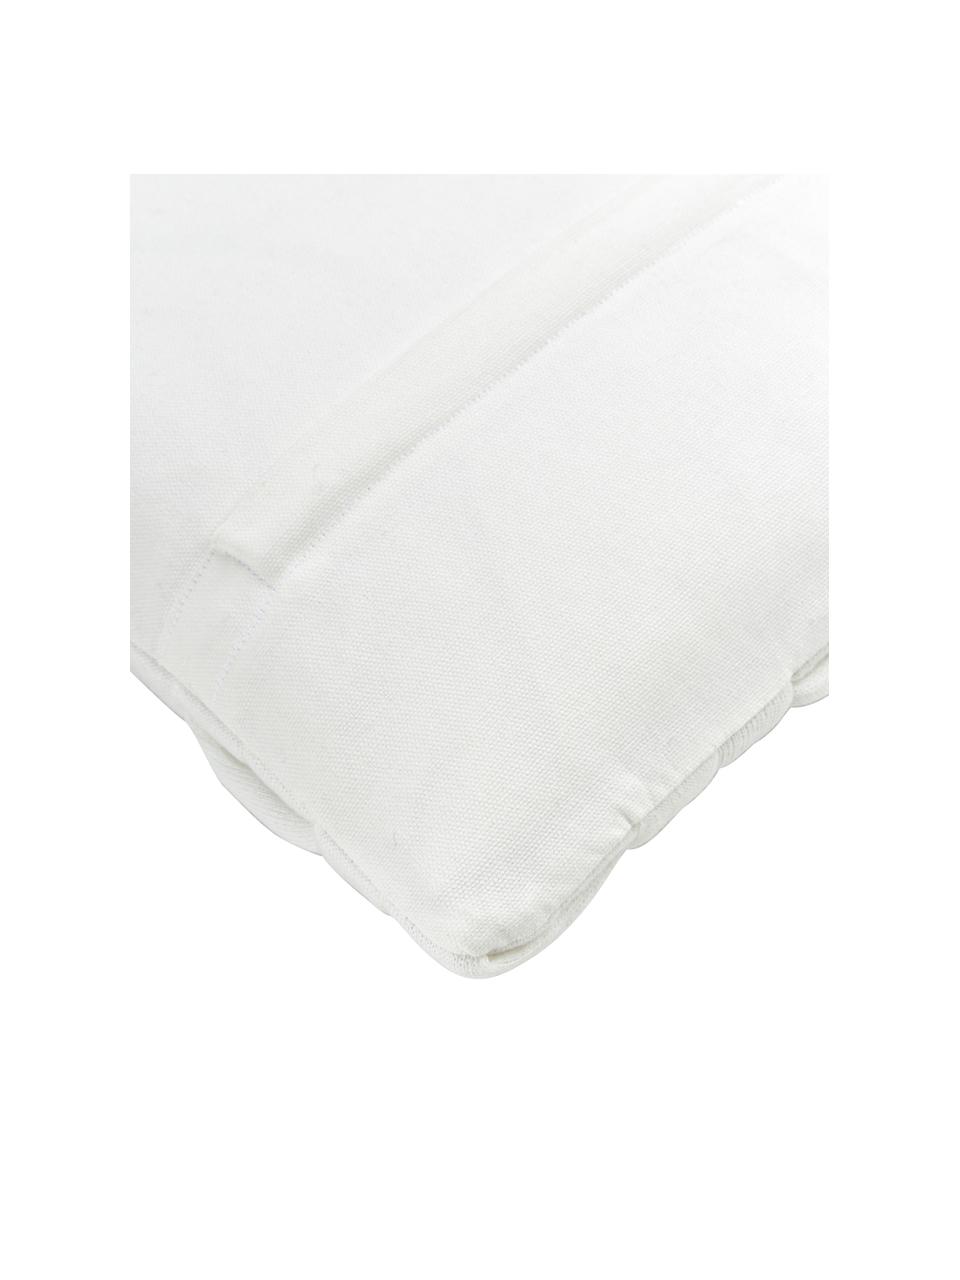 Pleciona poszewka na poduszkę Norman, Biały, S 40 x D 40 cm